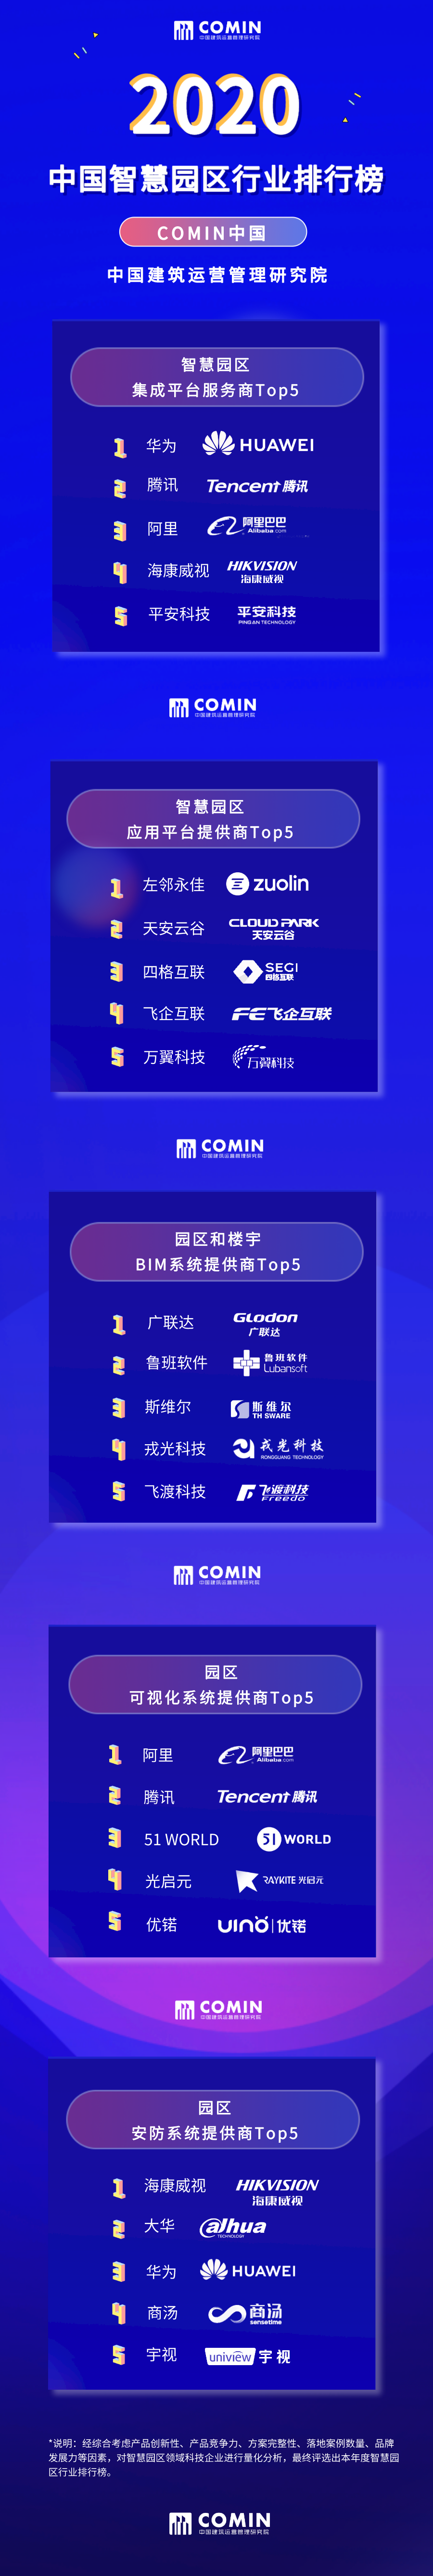 COMIN中国2020智慧园区行业排行榜.png